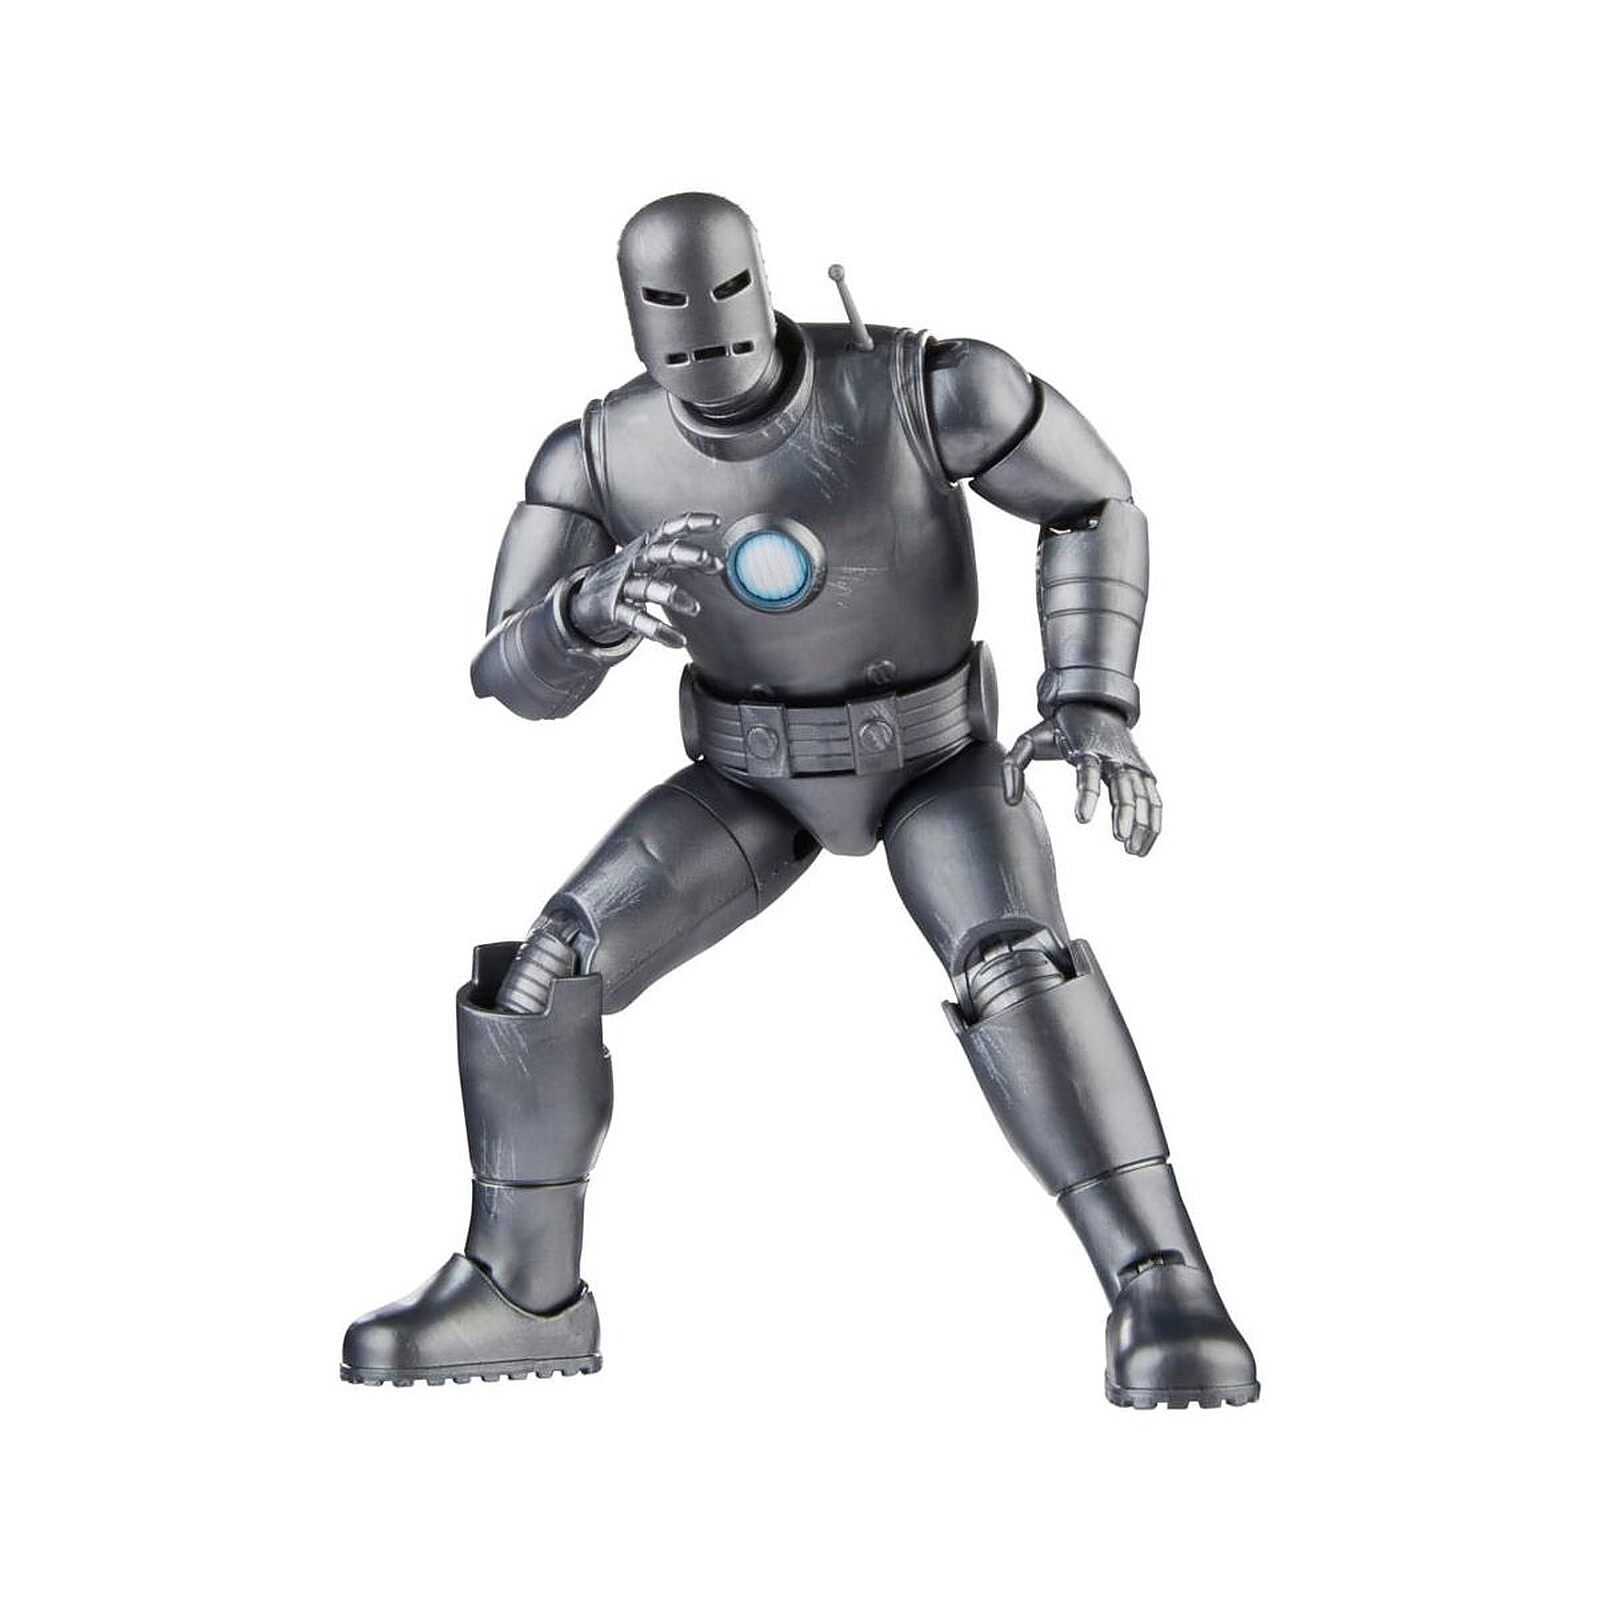 Marvel - Figurine Cable Guy Venom 20 cm - Figurines - LDLC